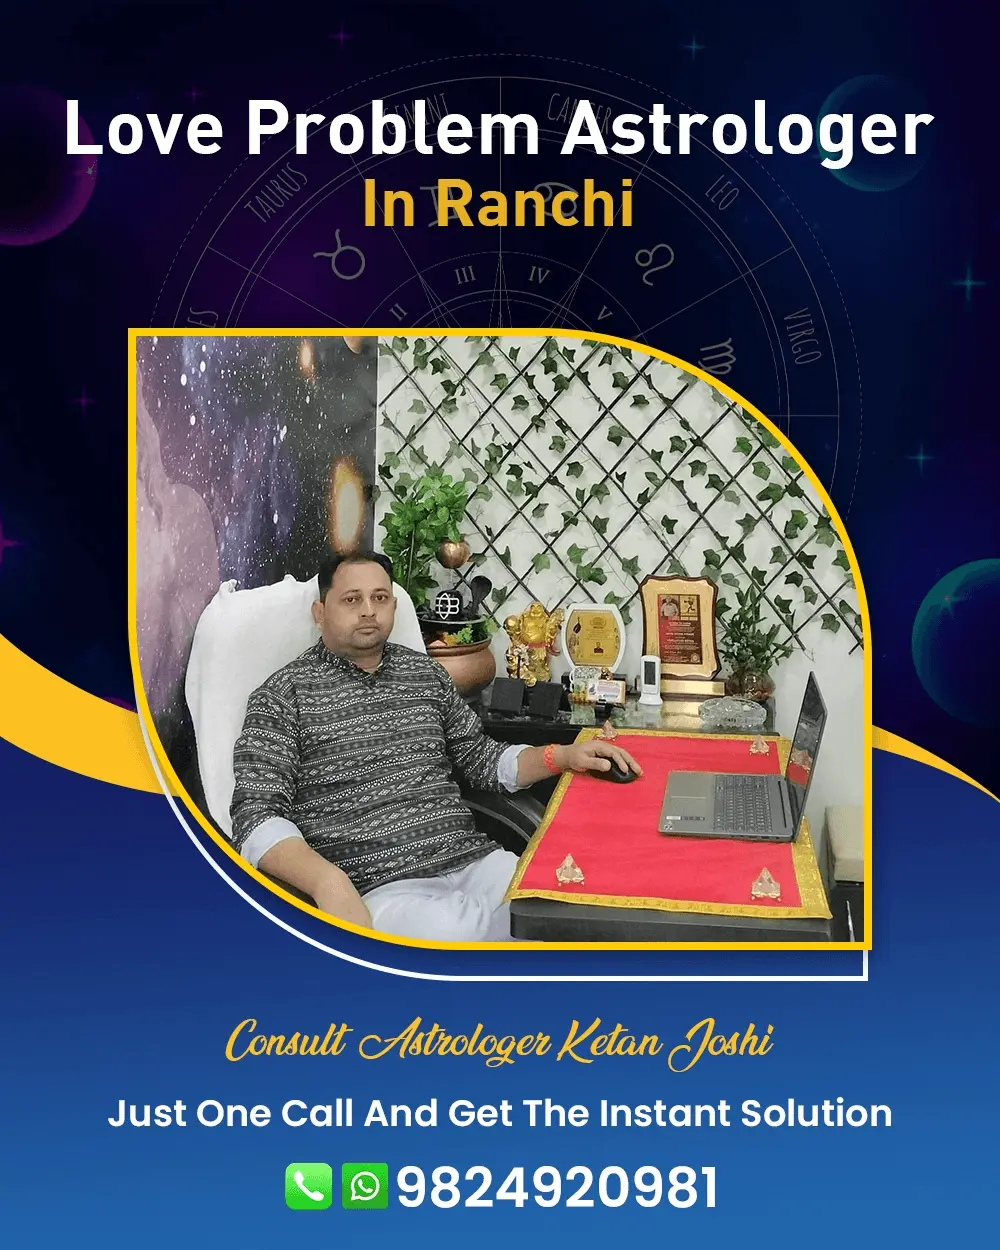 Love Problem Astrologer In Ranchi